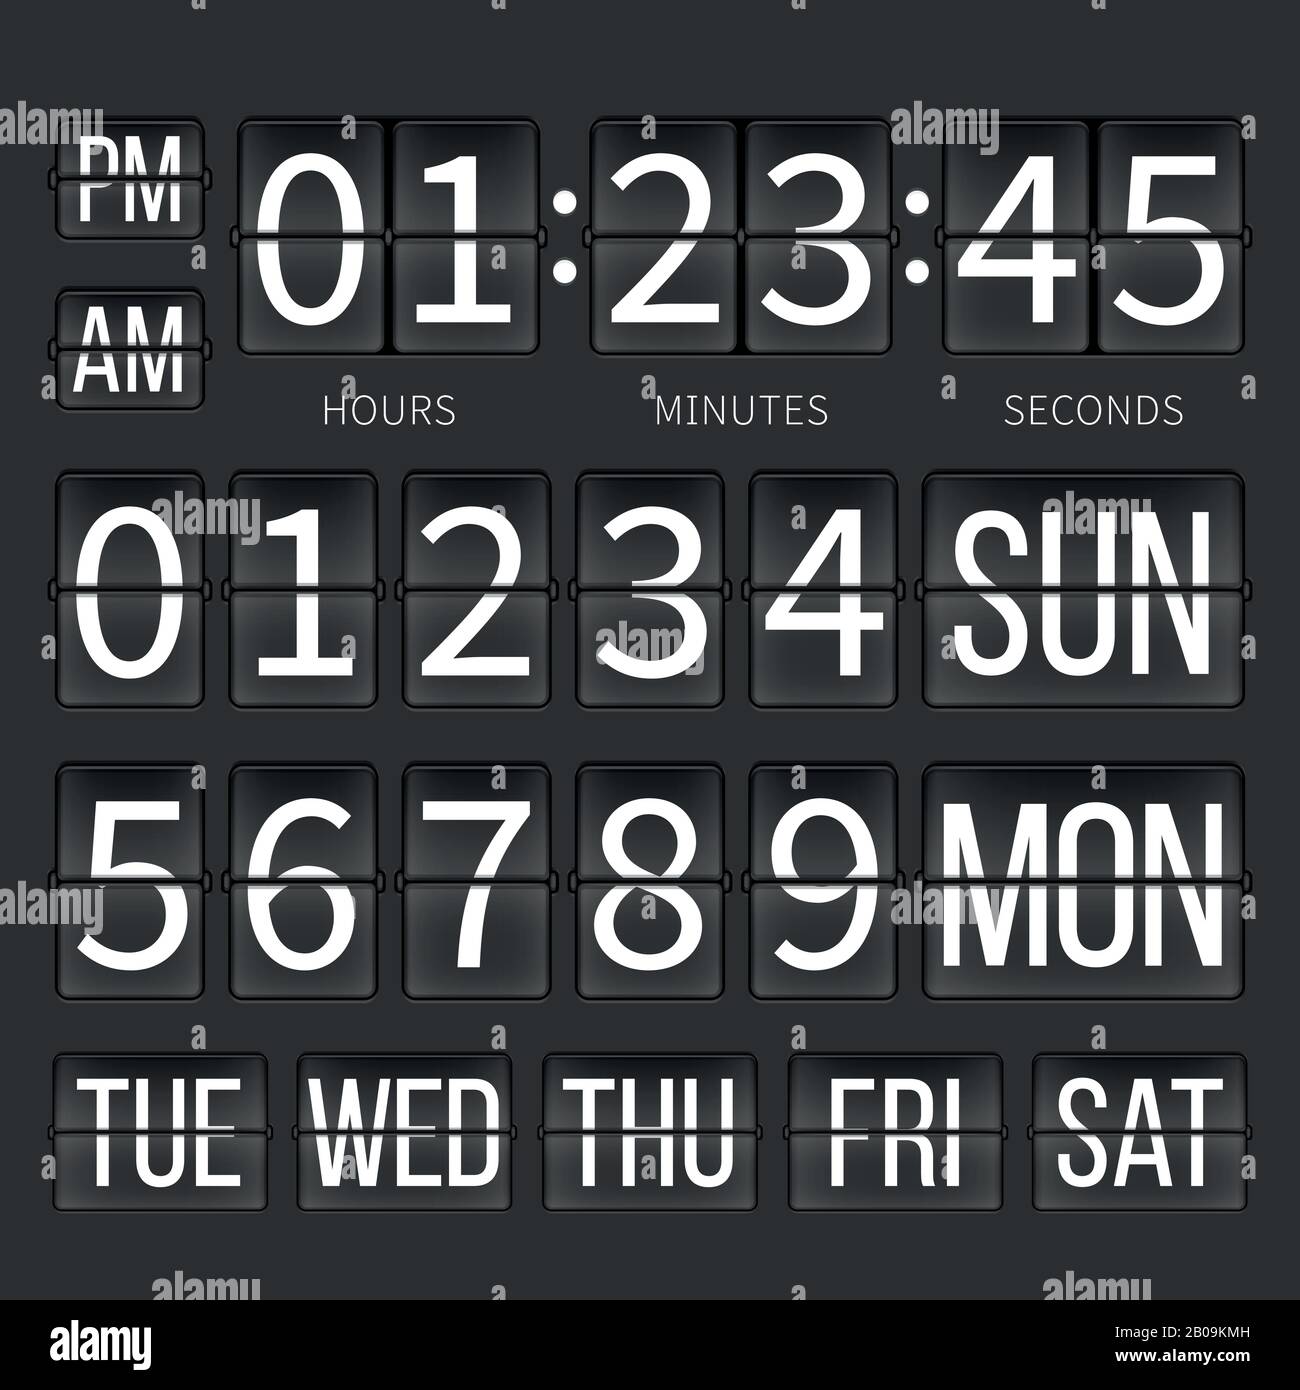 Airport Timer Counter Digital Clock Flip Calendar Mechanical Counter Time Board Illustration Of Airport Clock Stock Vector Image Art Alamy